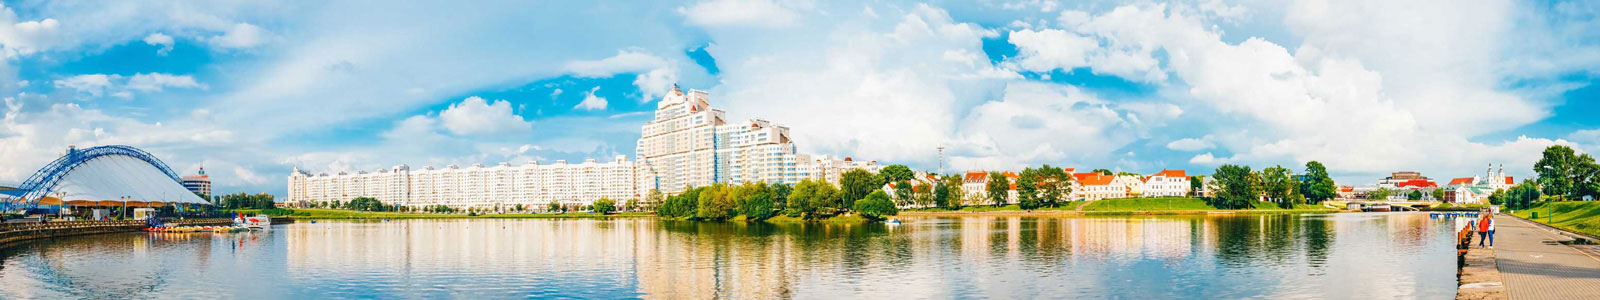 №3377 - Панорама центра в Минске, Немига, Свислочь